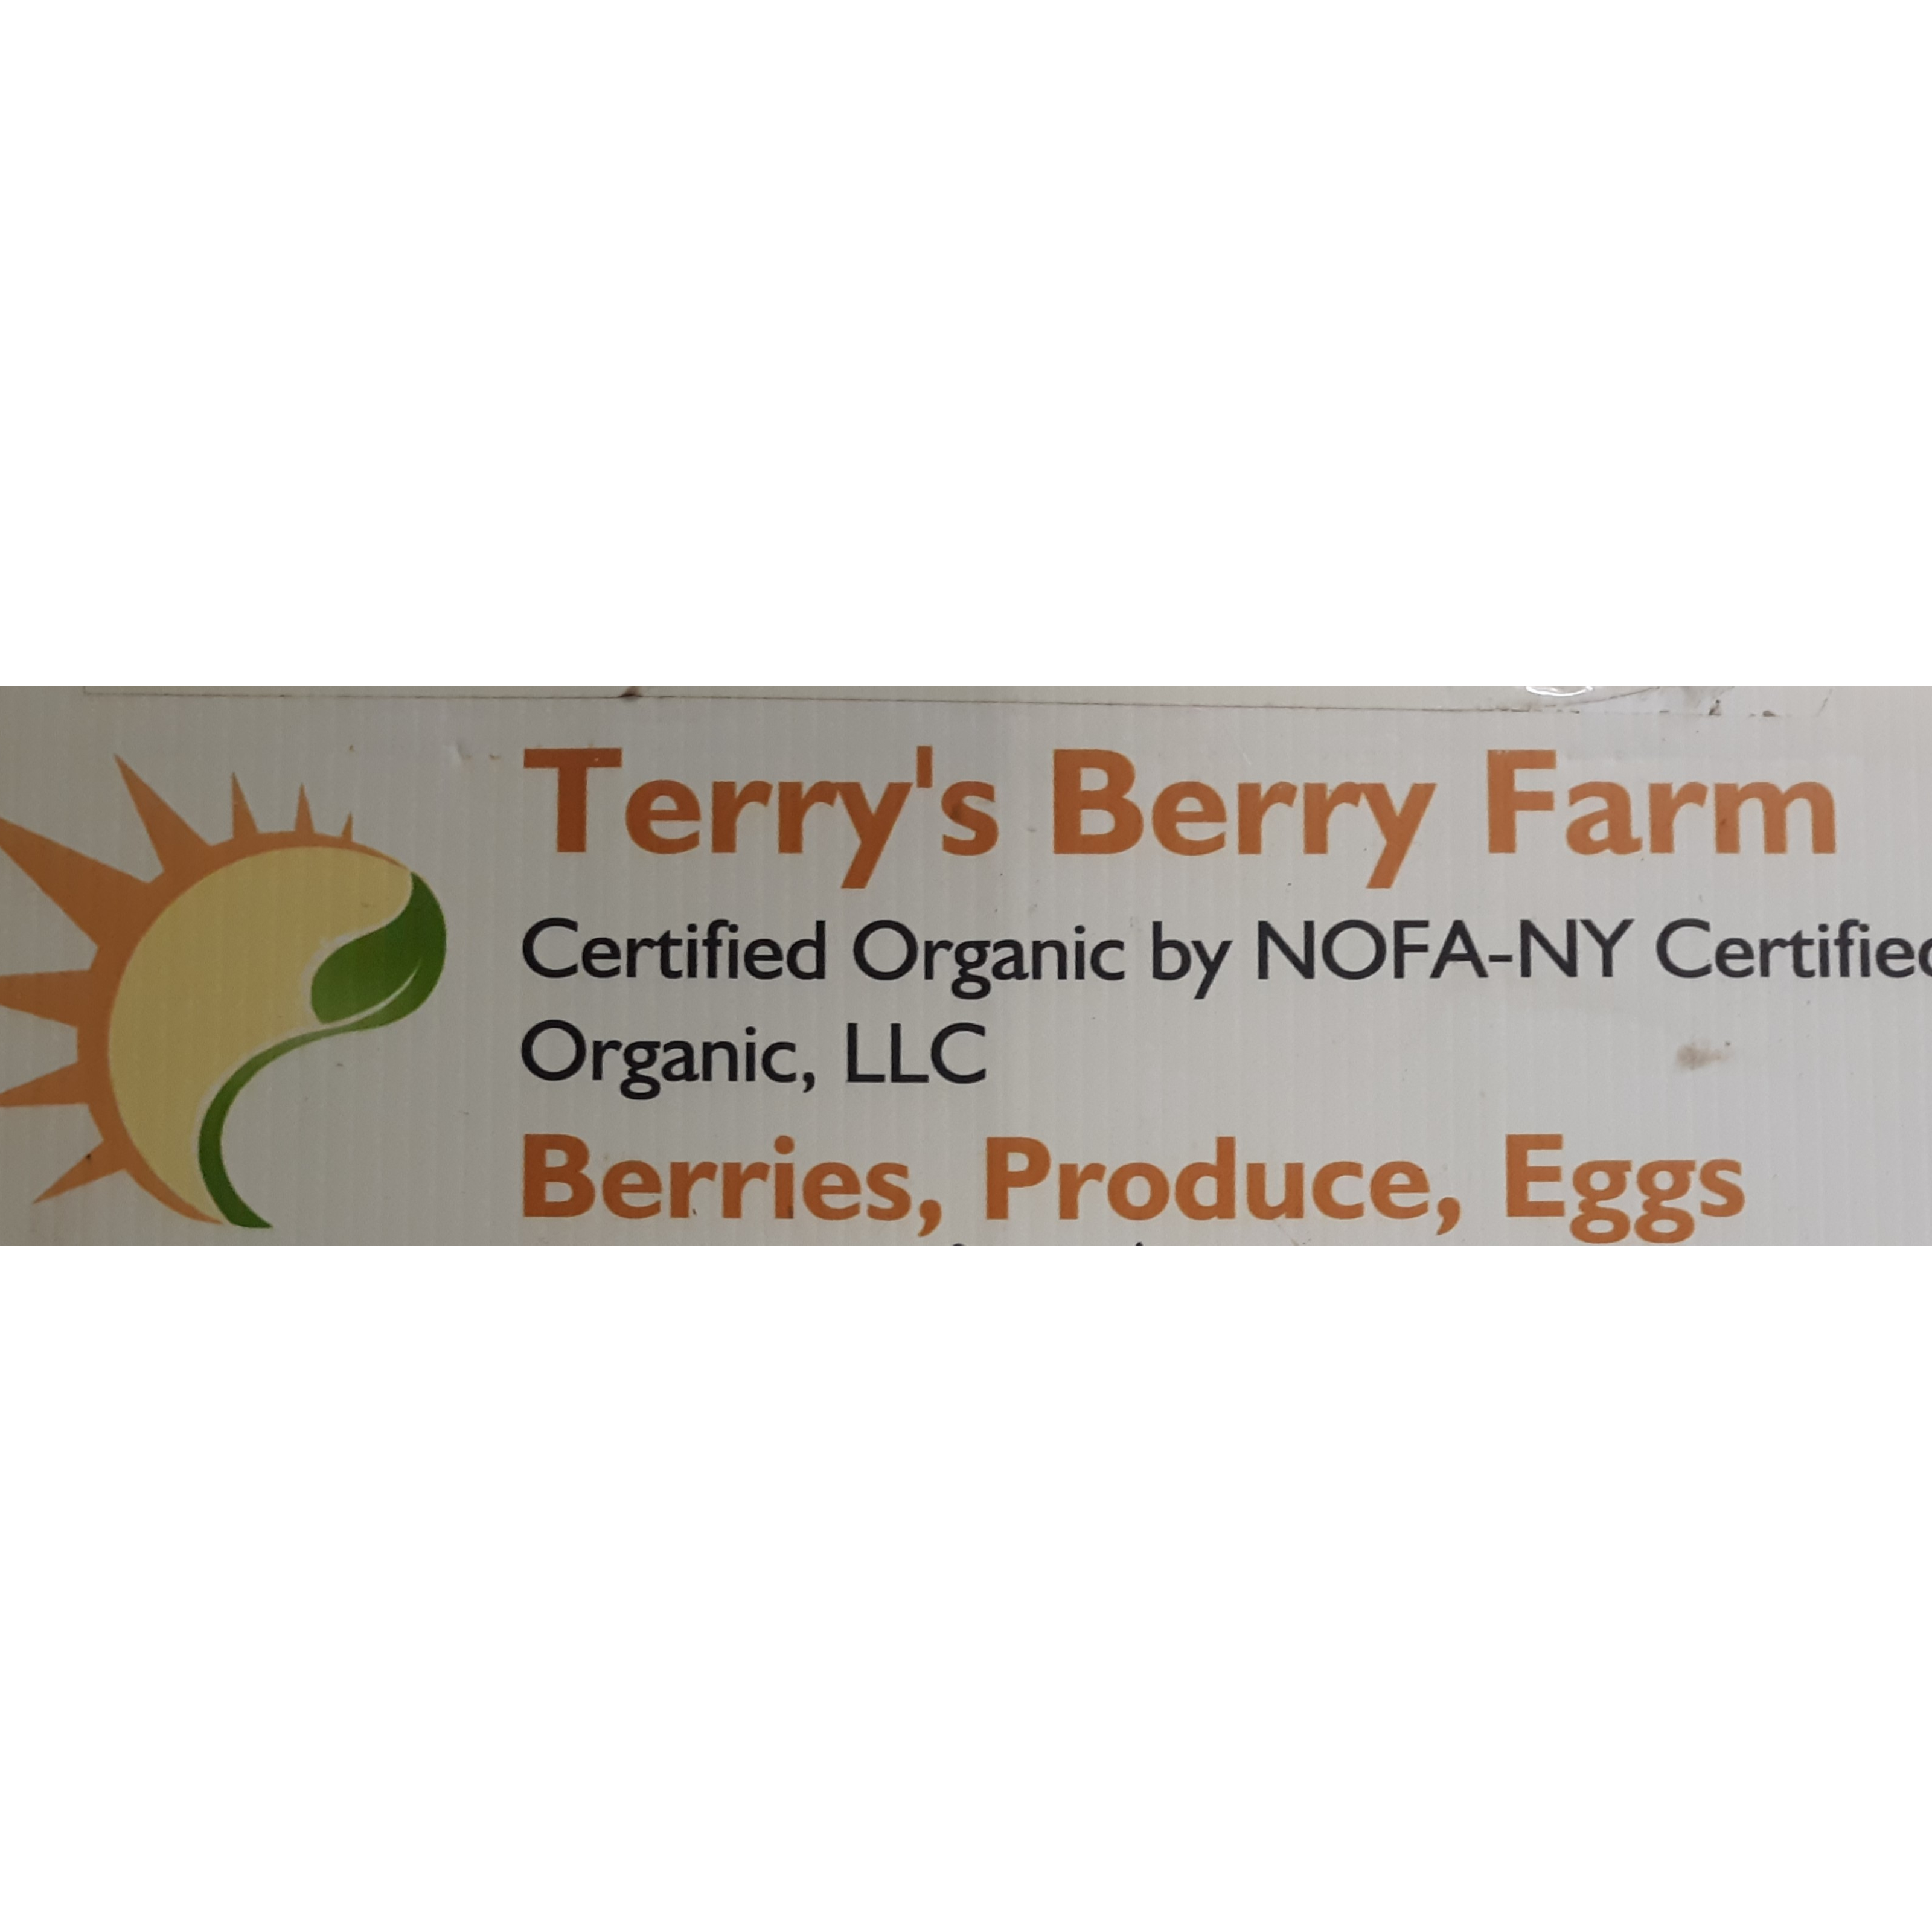 Terry's Berry Farm